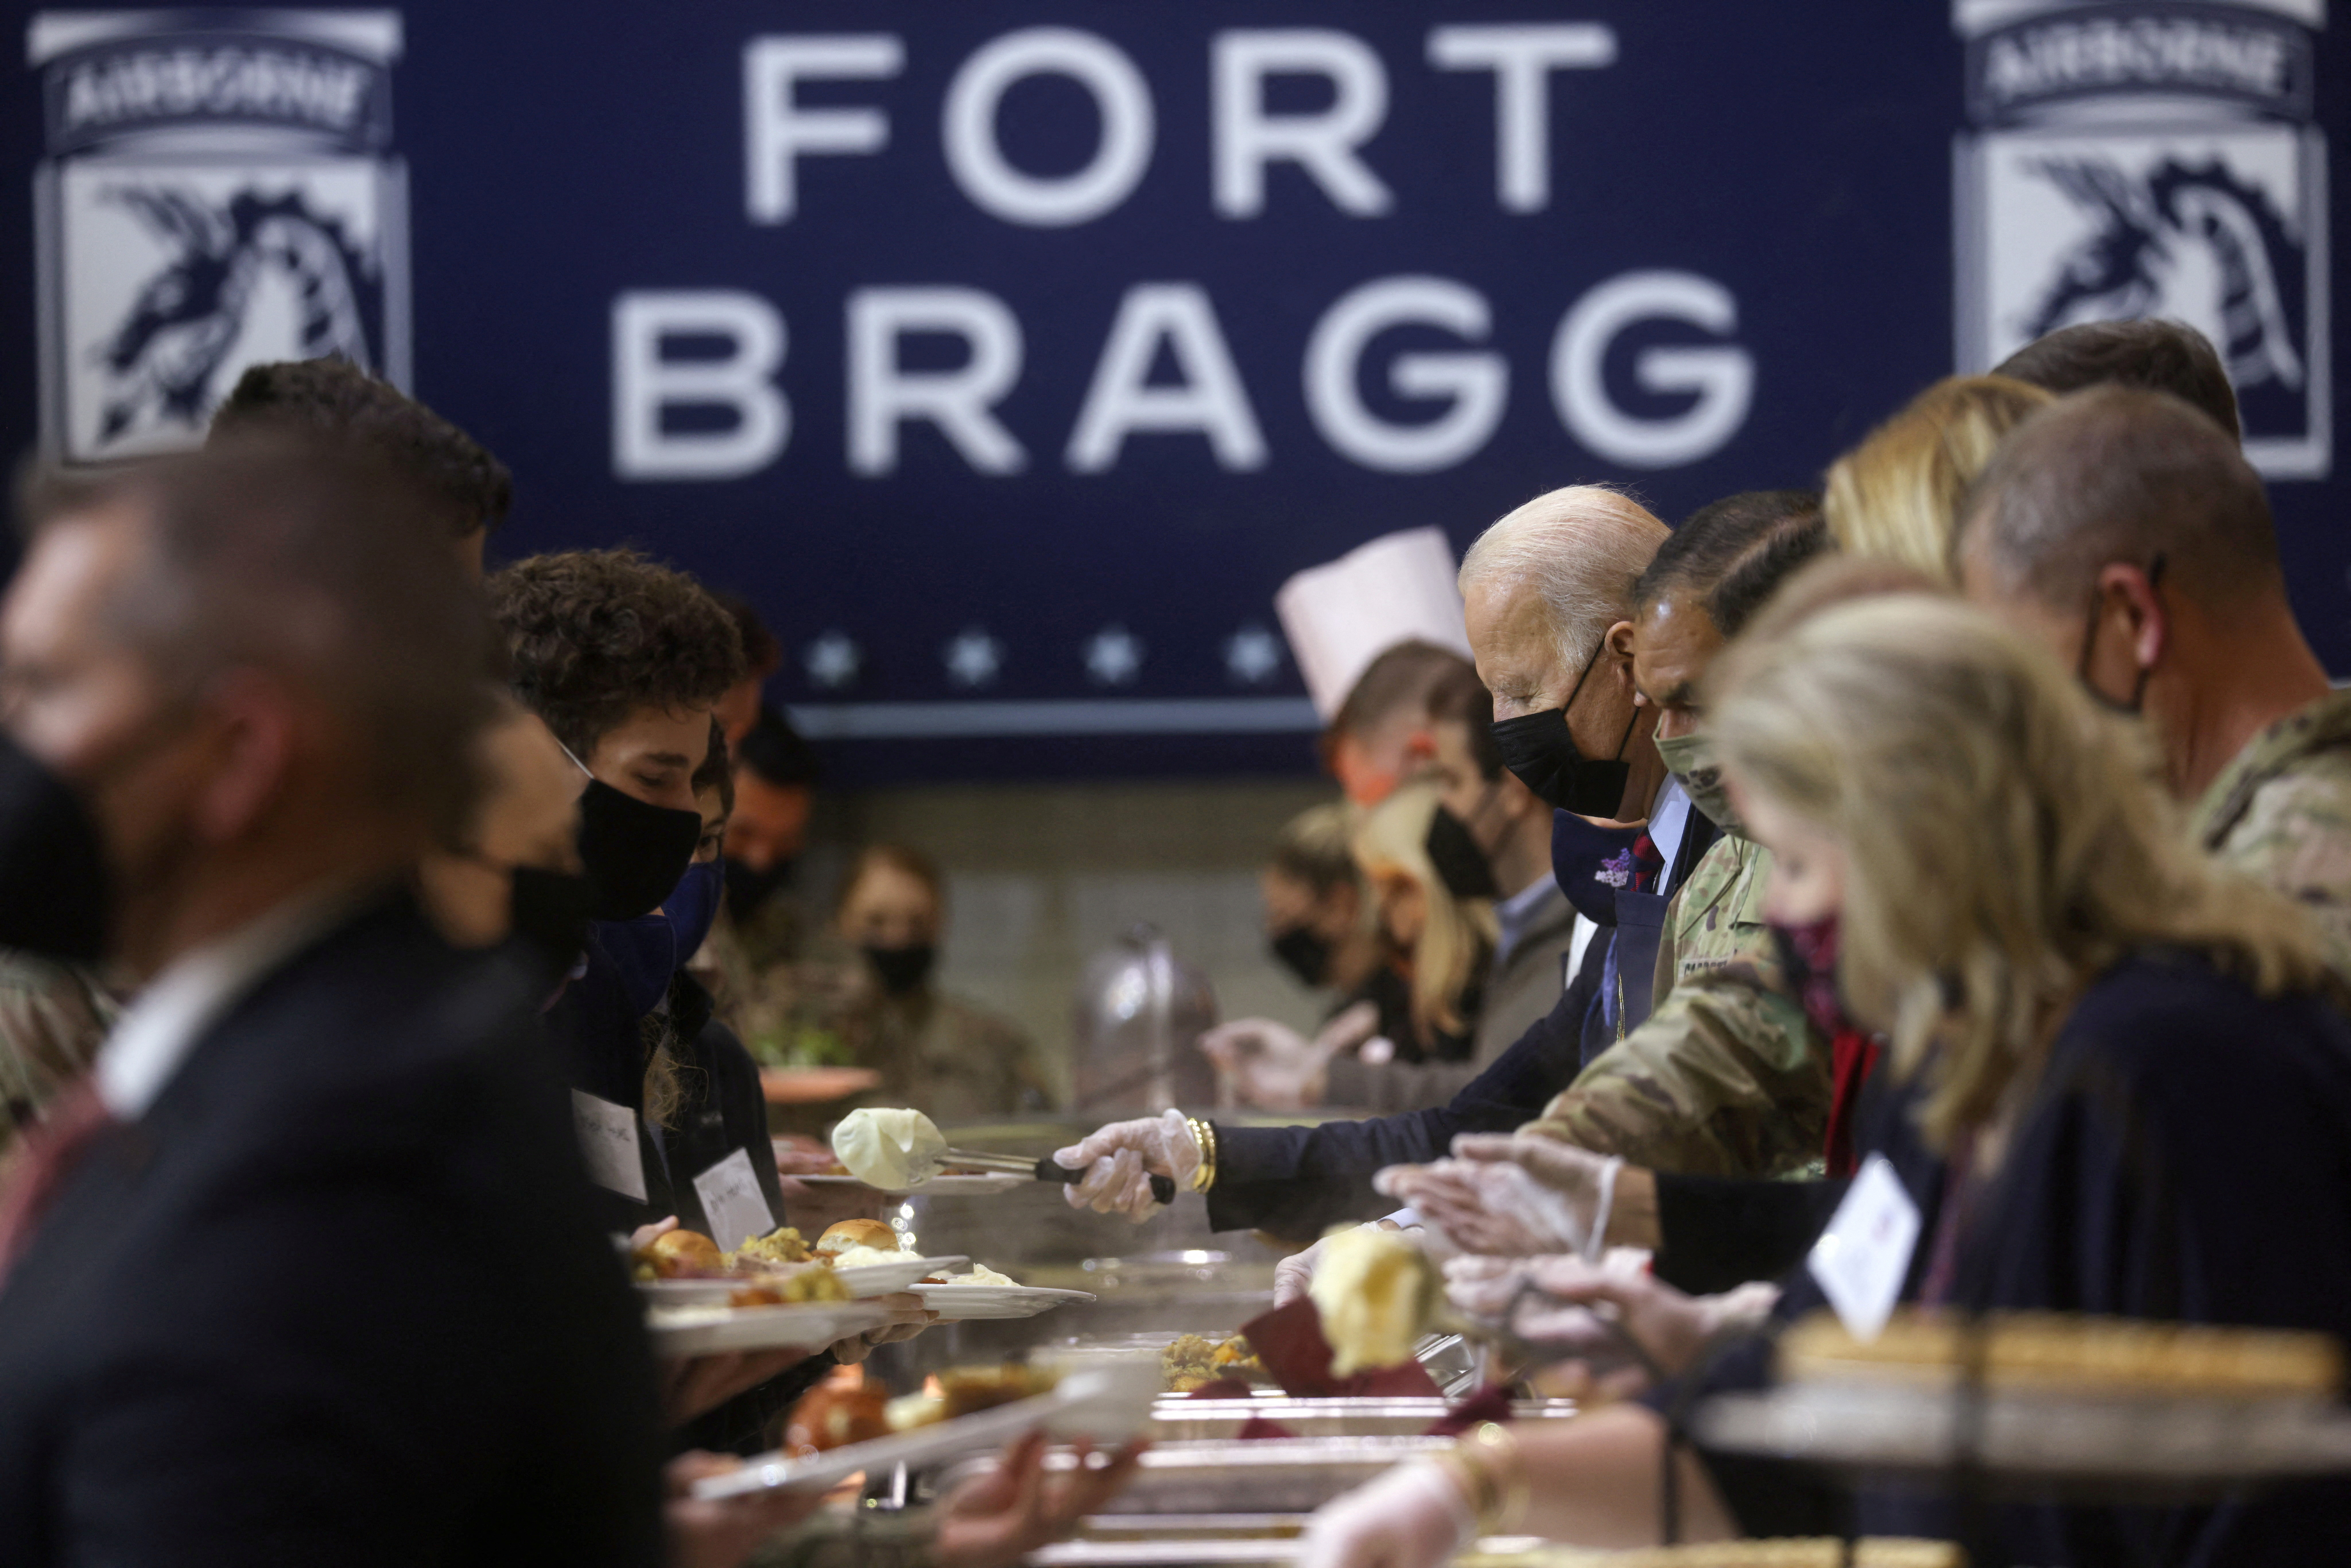 U.S. President Biden attends Thanksgiving event at Fort Bragg